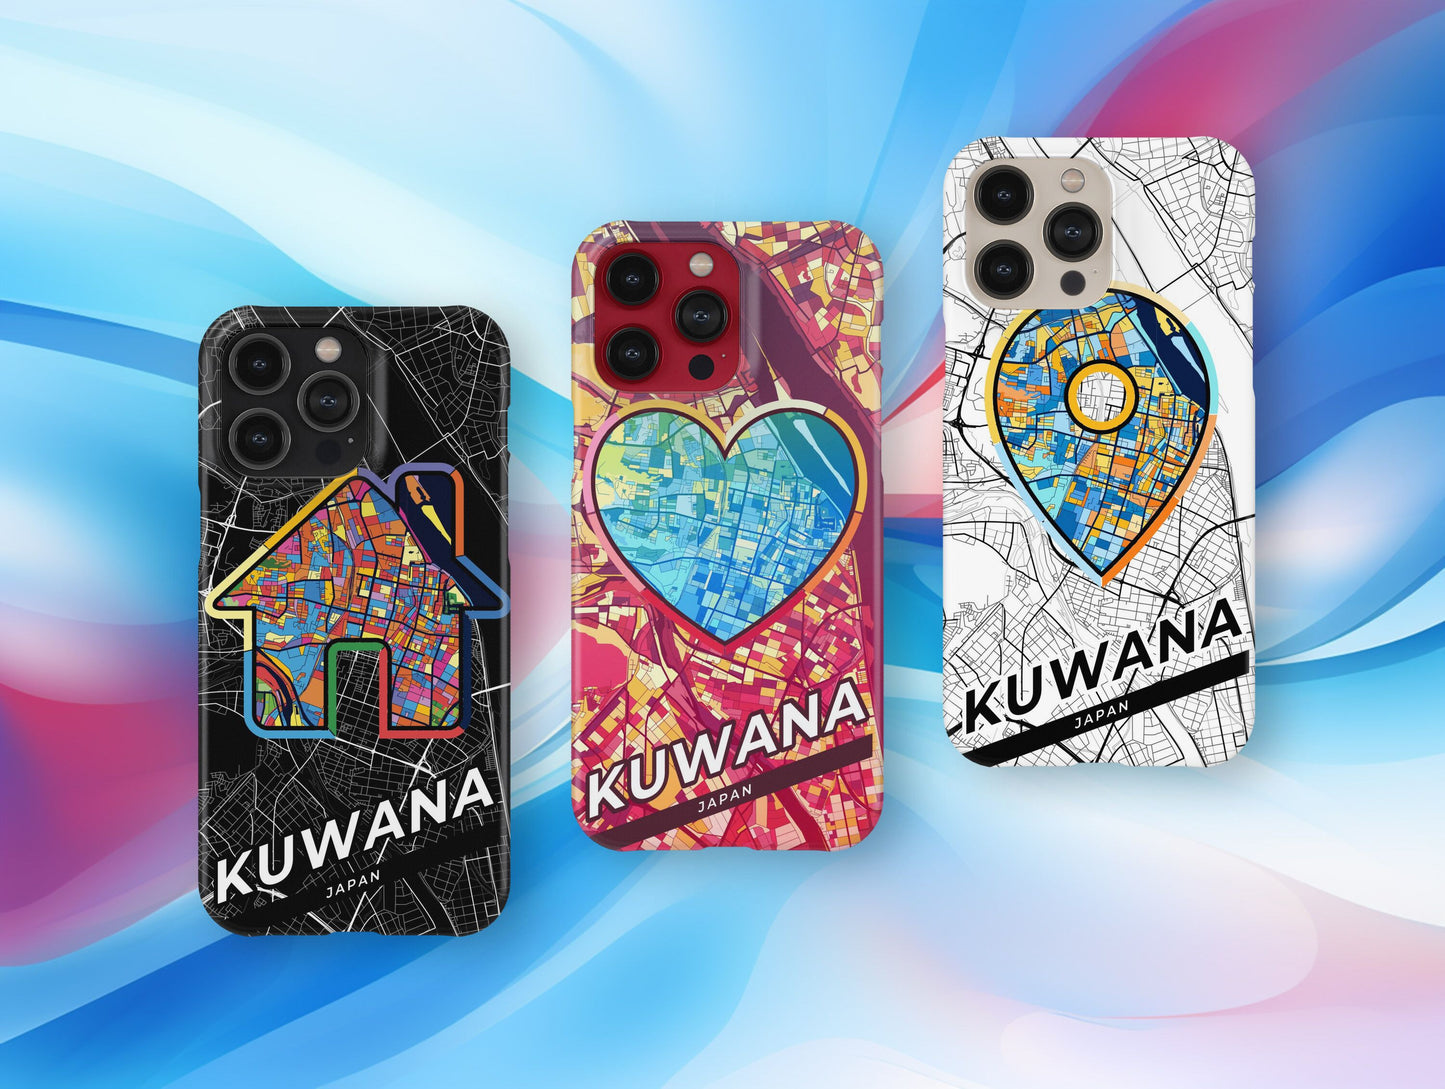 Kuwana Japan slim phone case with colorful icon. Birthday, wedding or housewarming gift. Couple match cases.